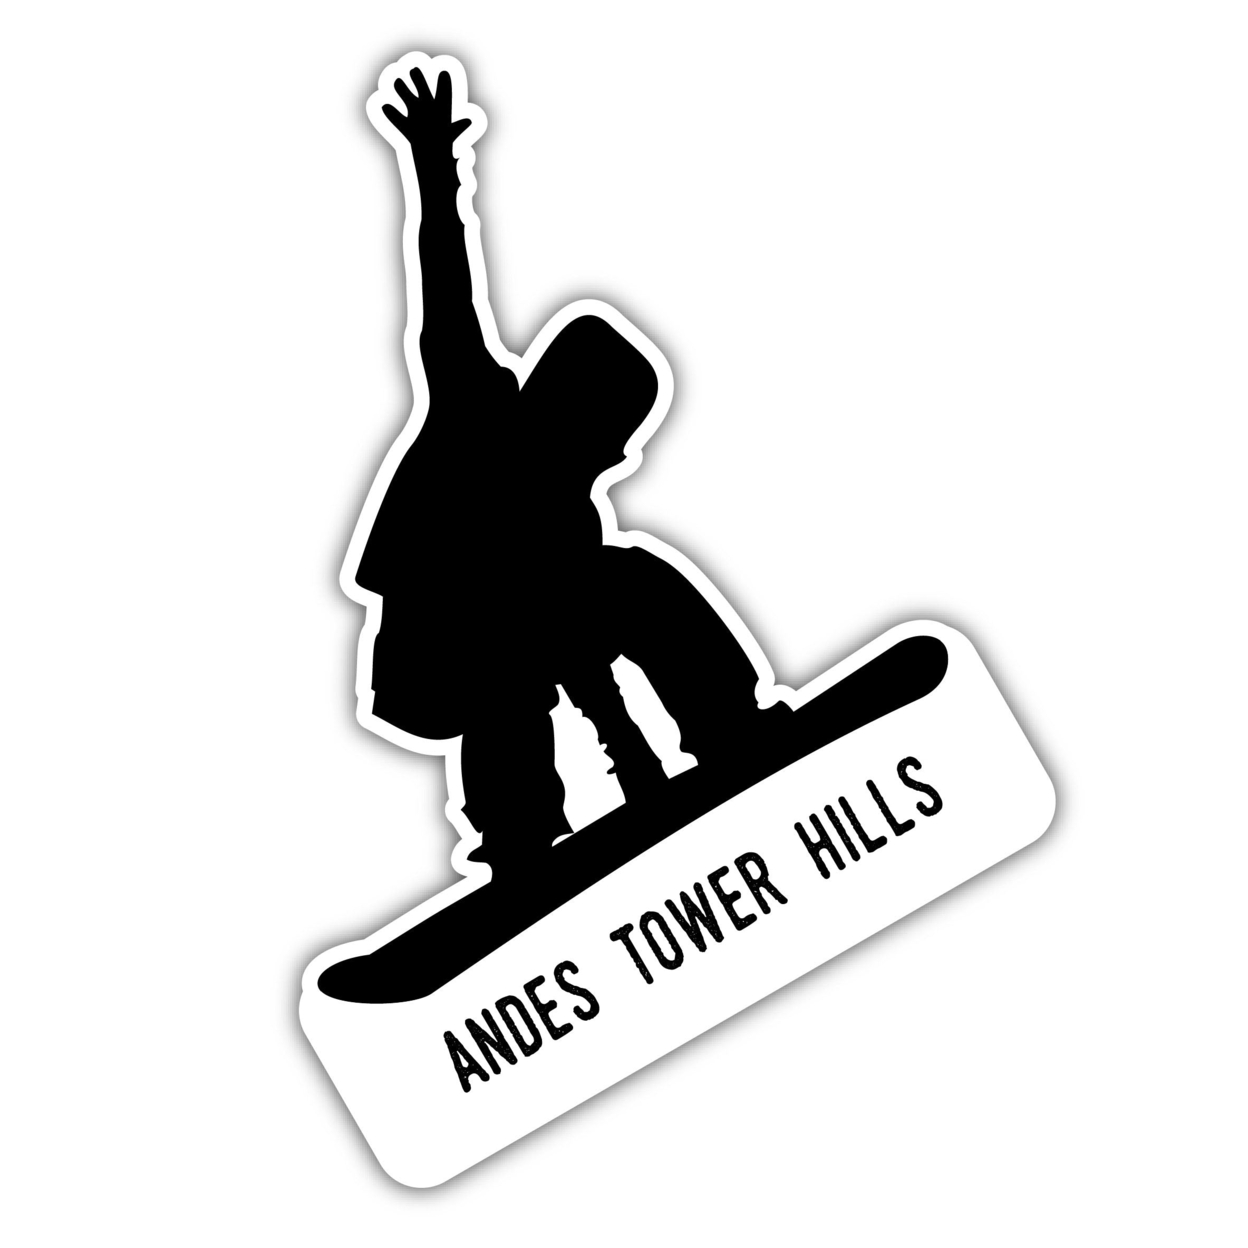 Andes Tower Hills Minnesota Ski Adventures Souvenir 4 Inch Vinyl Decal Sticker Mountain Design